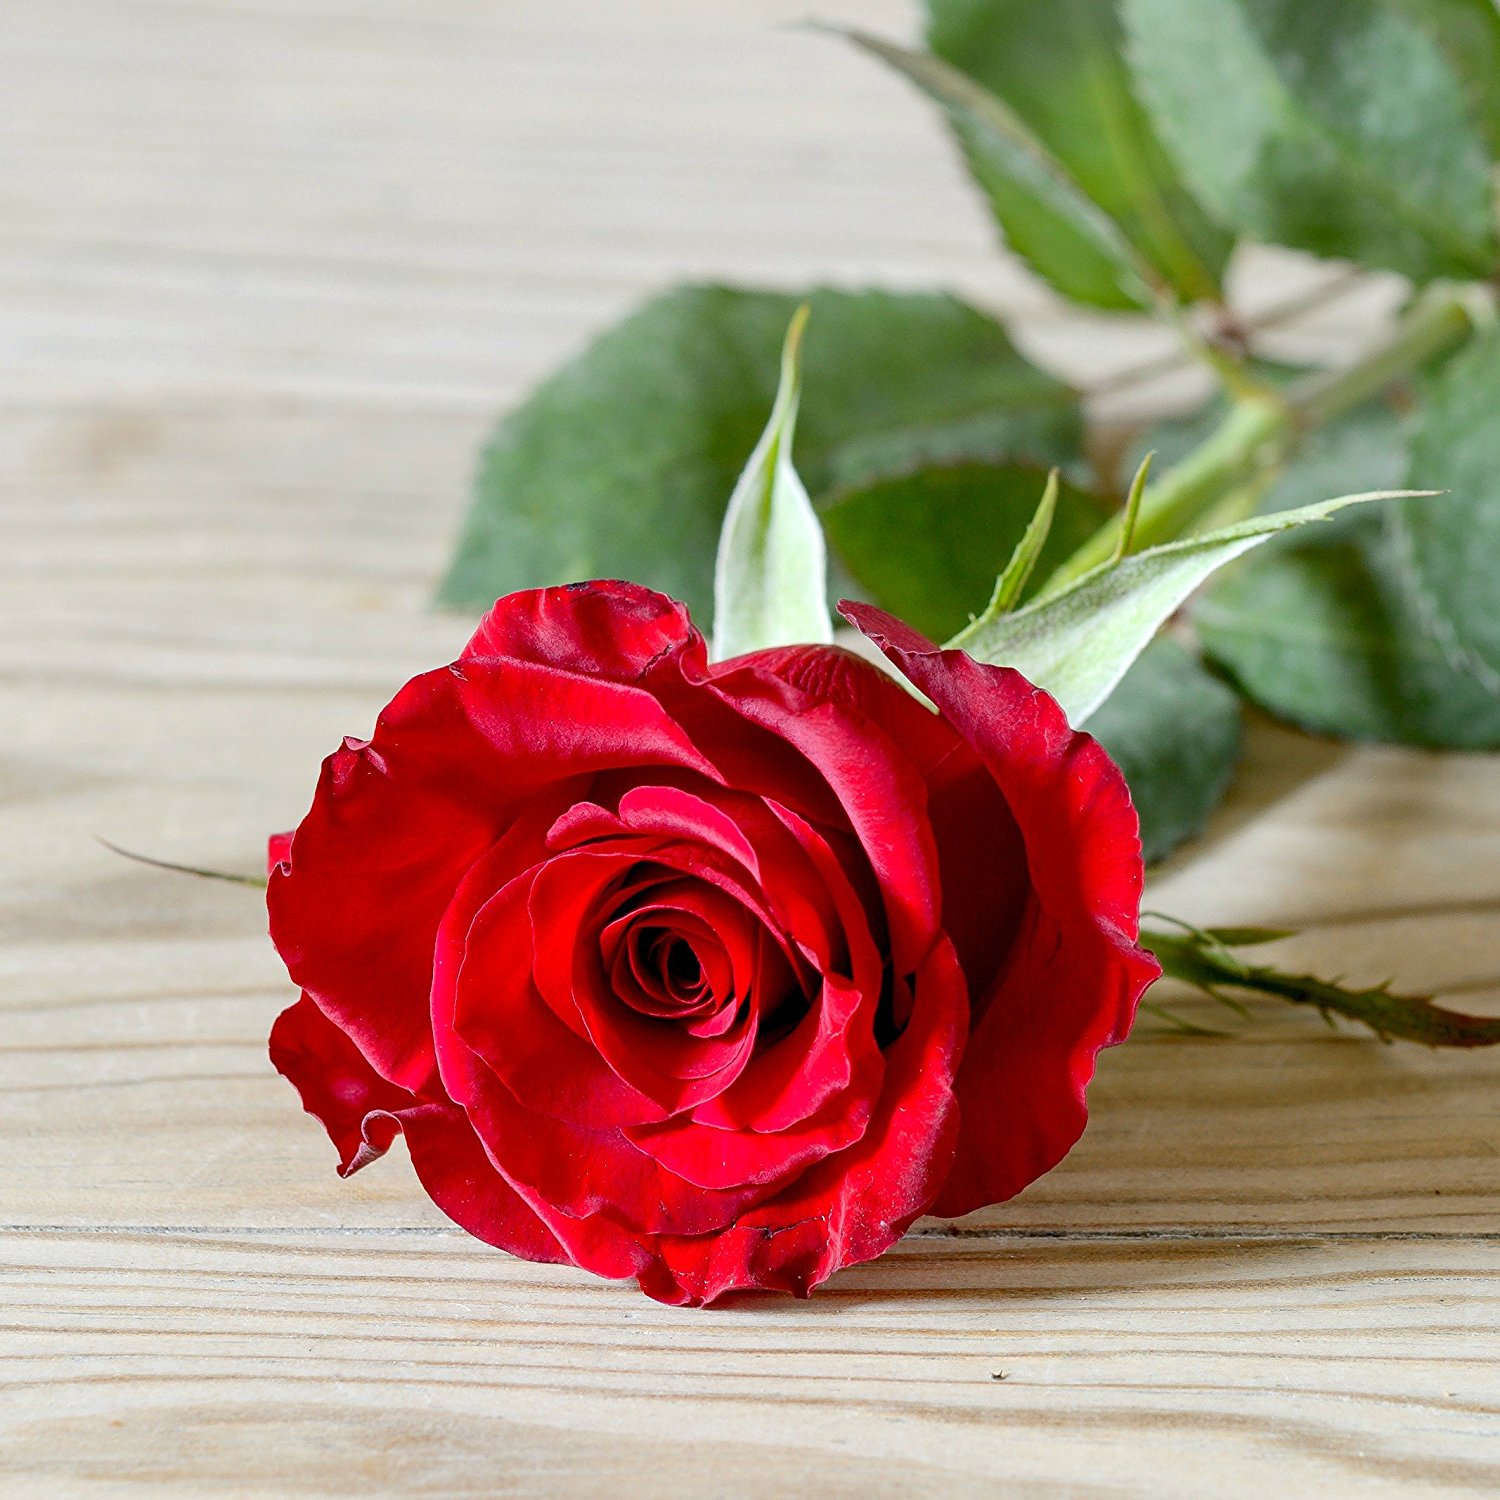 Free photo: Single red rose - Love, Red, Rose - Free Download - Jooinn